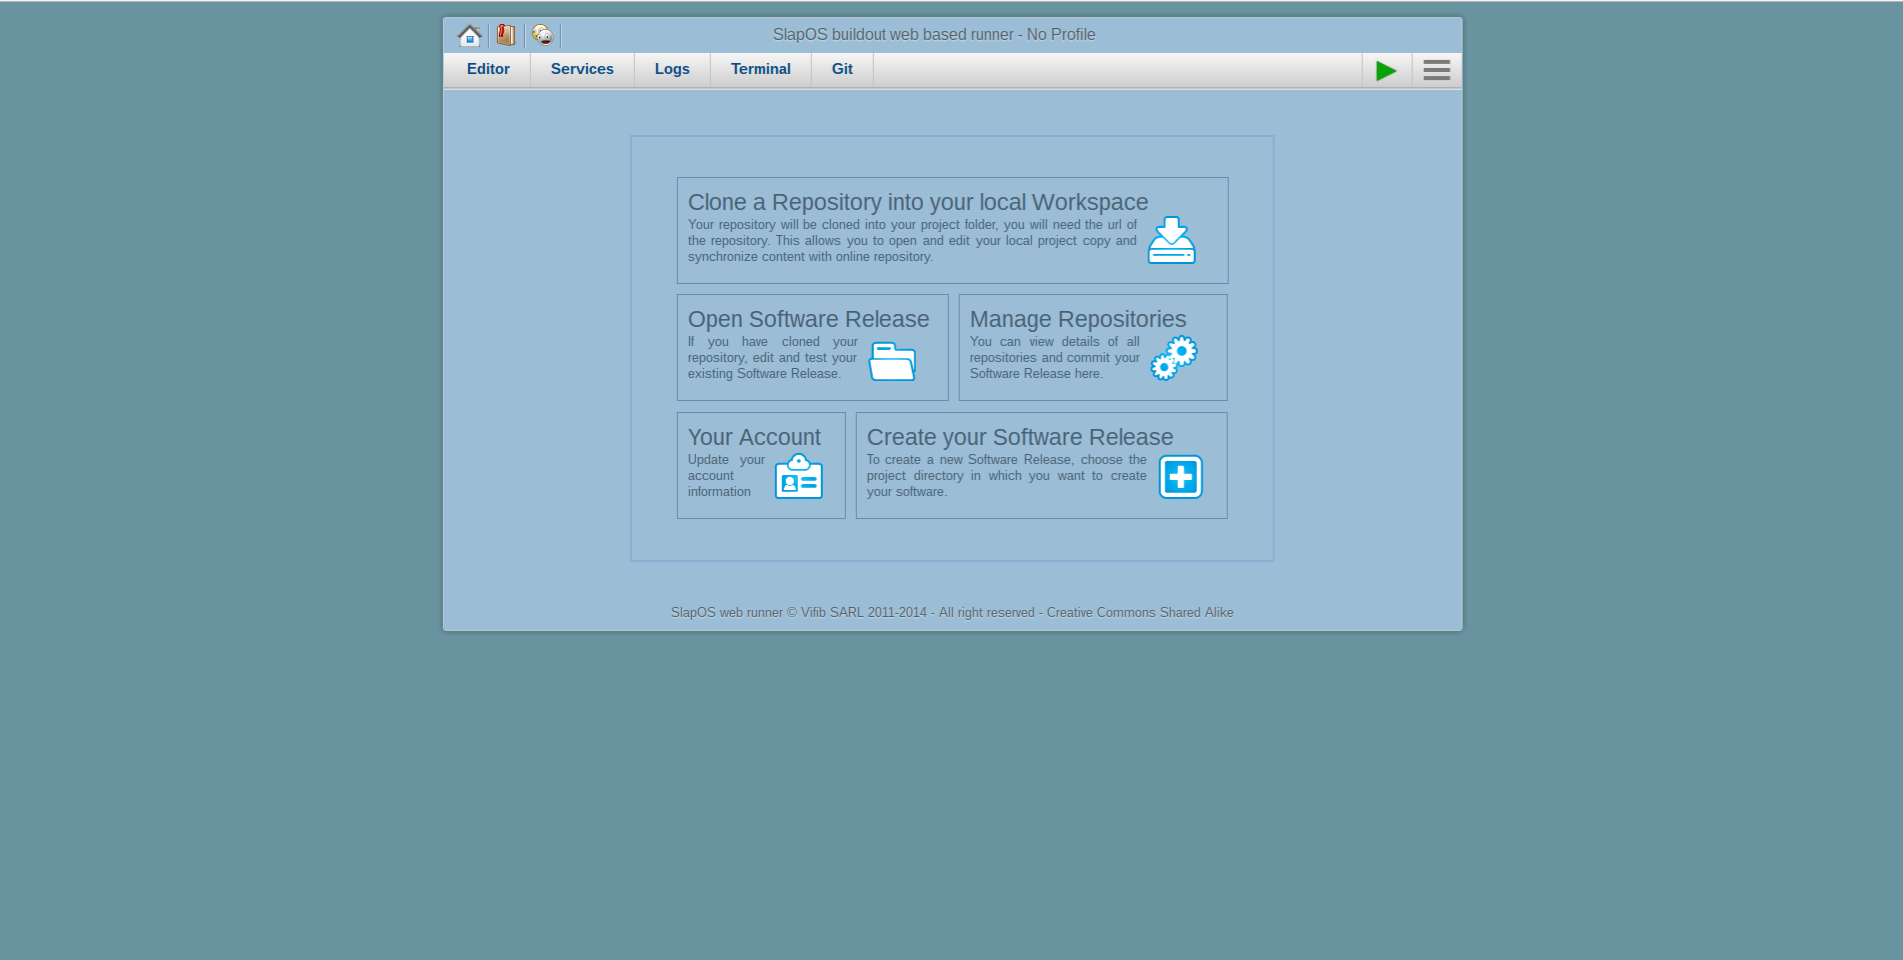 Webrunner Interface - Landing Page